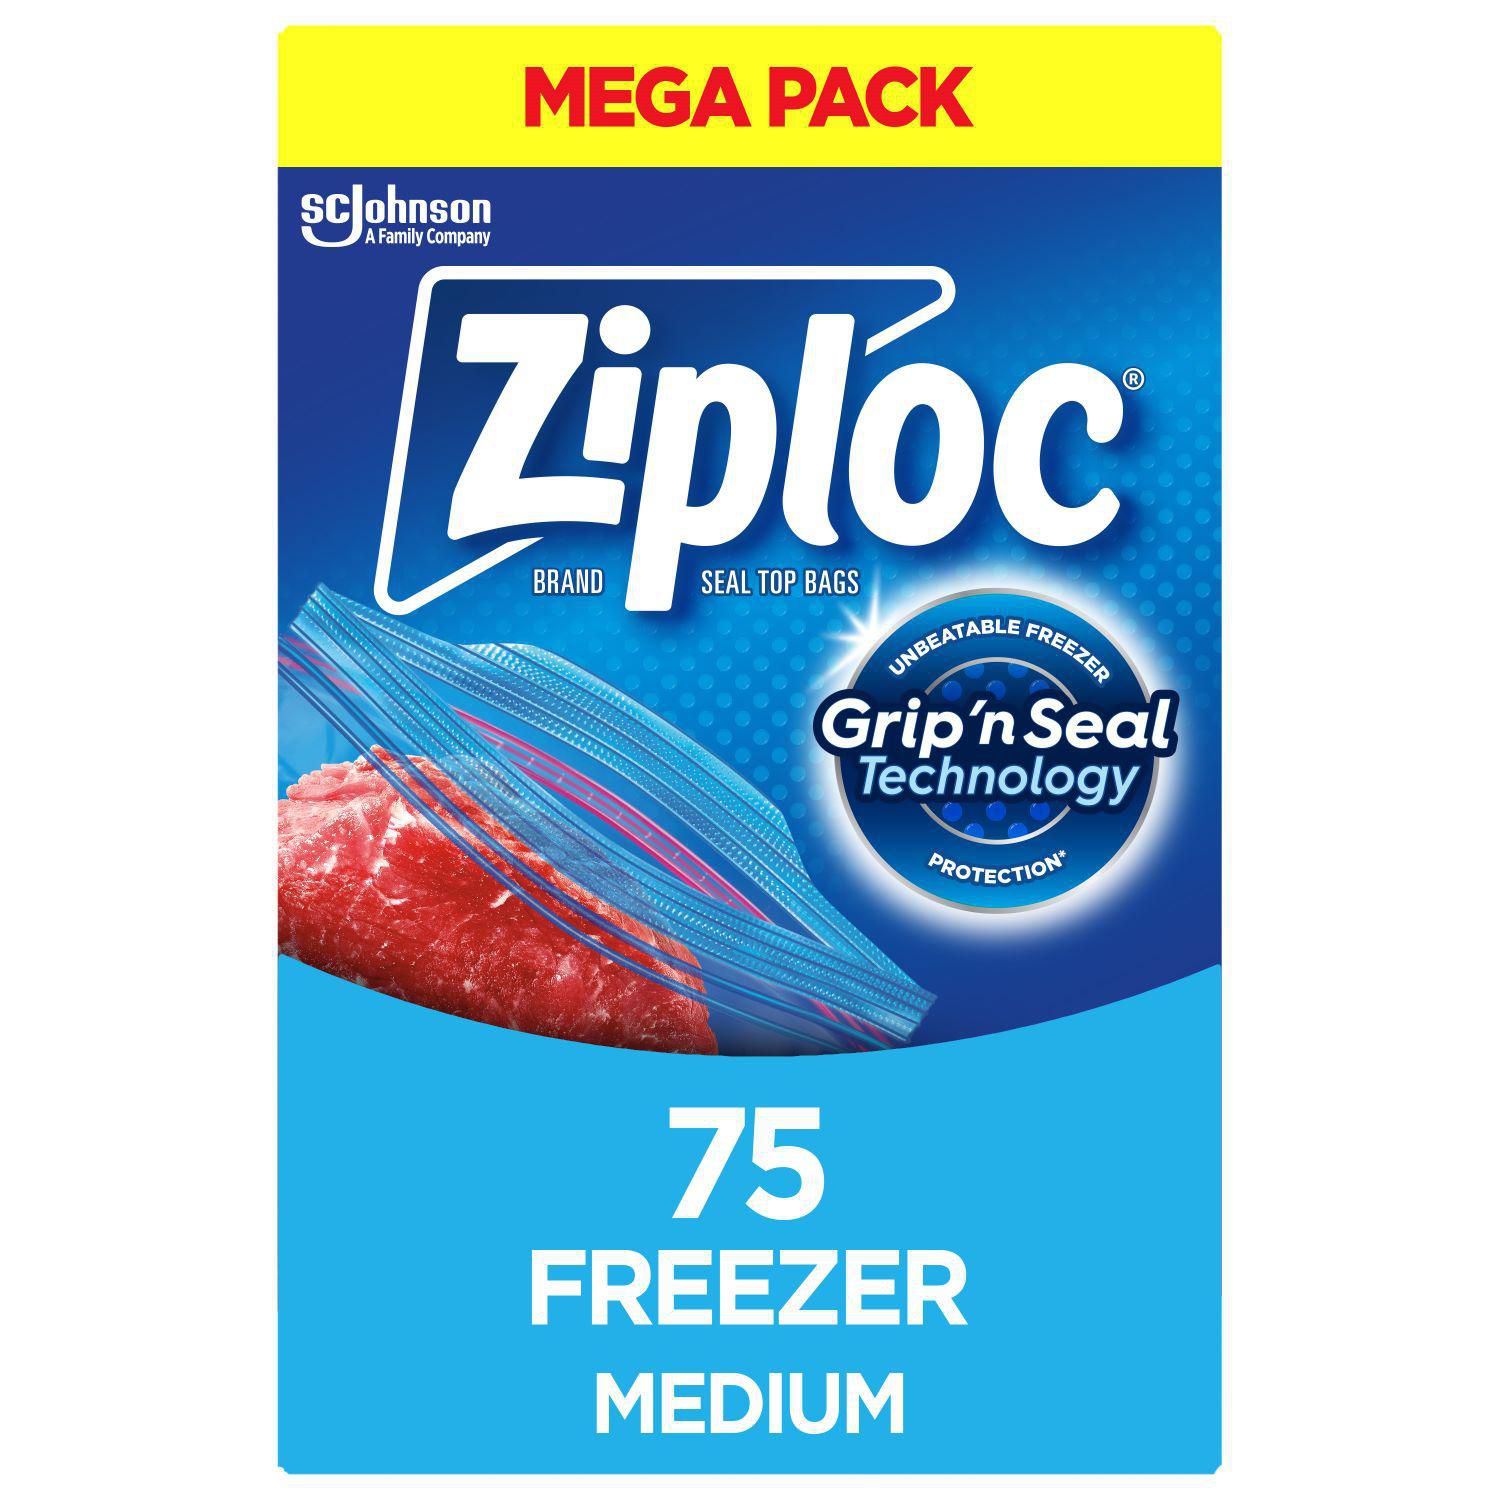 Ziploc® Freezer Bags, Grip 'n Seal Technology for Easier Grip